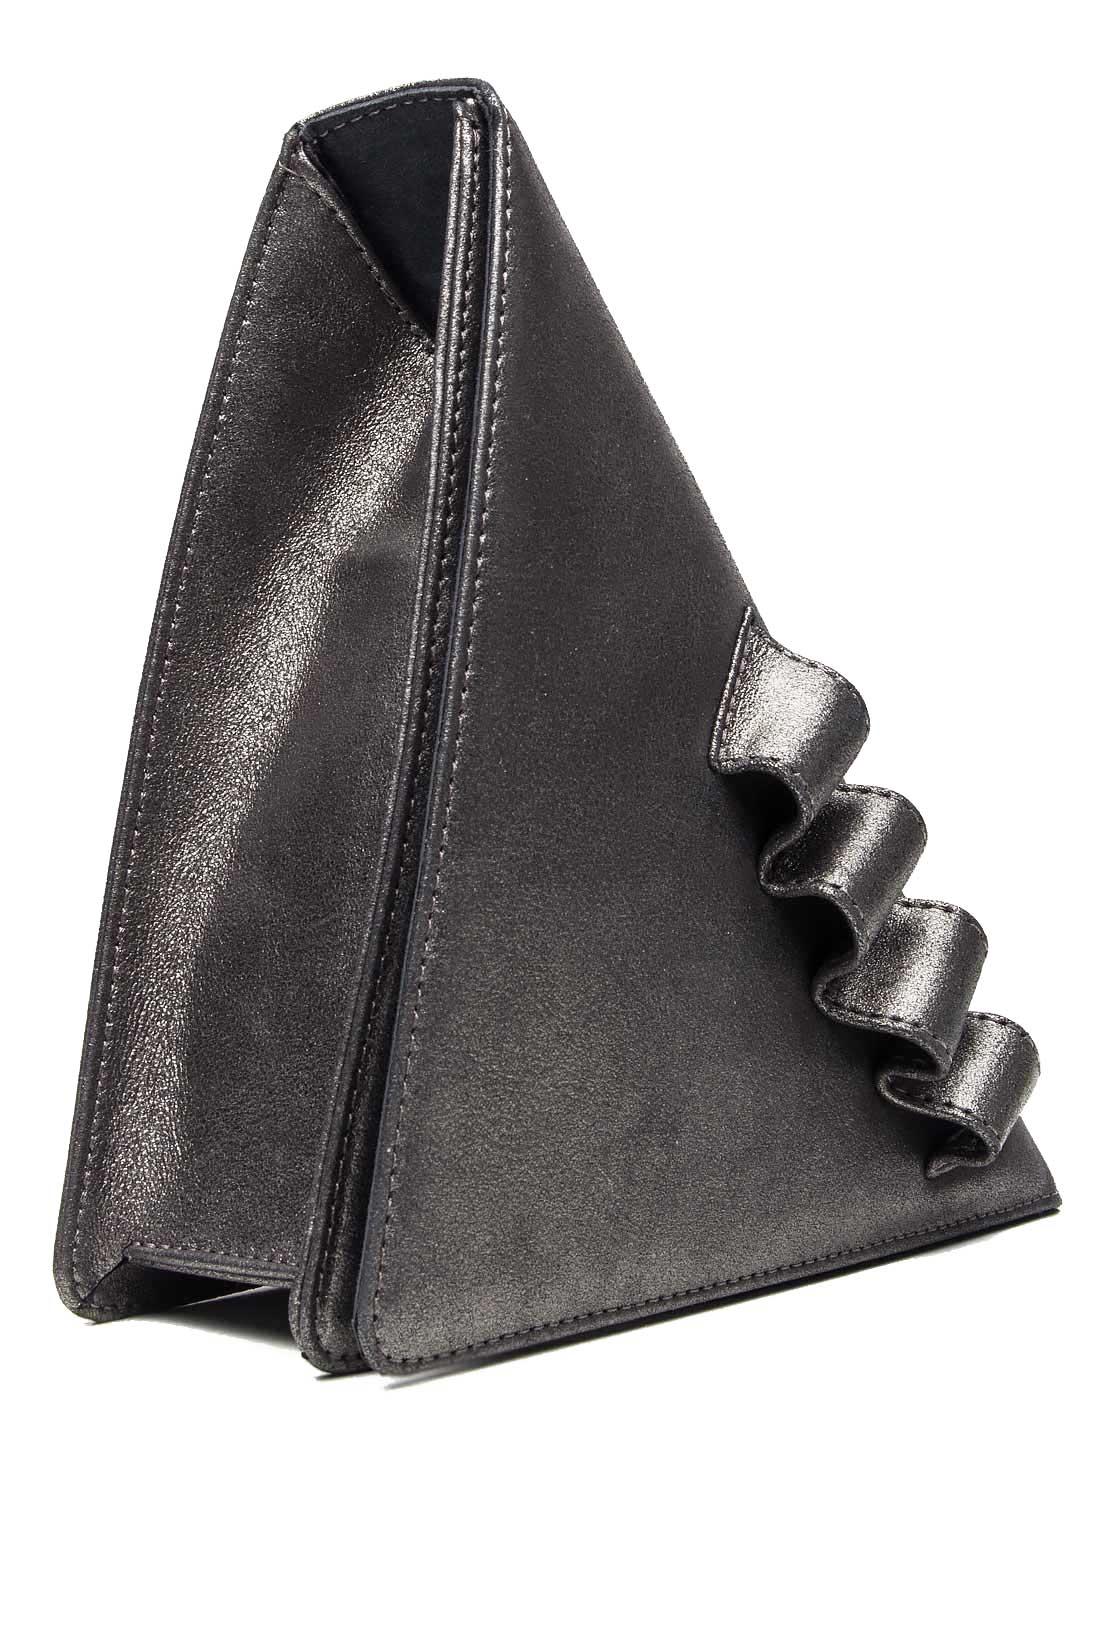 Leather triangle clutch Laura Olaru image 2